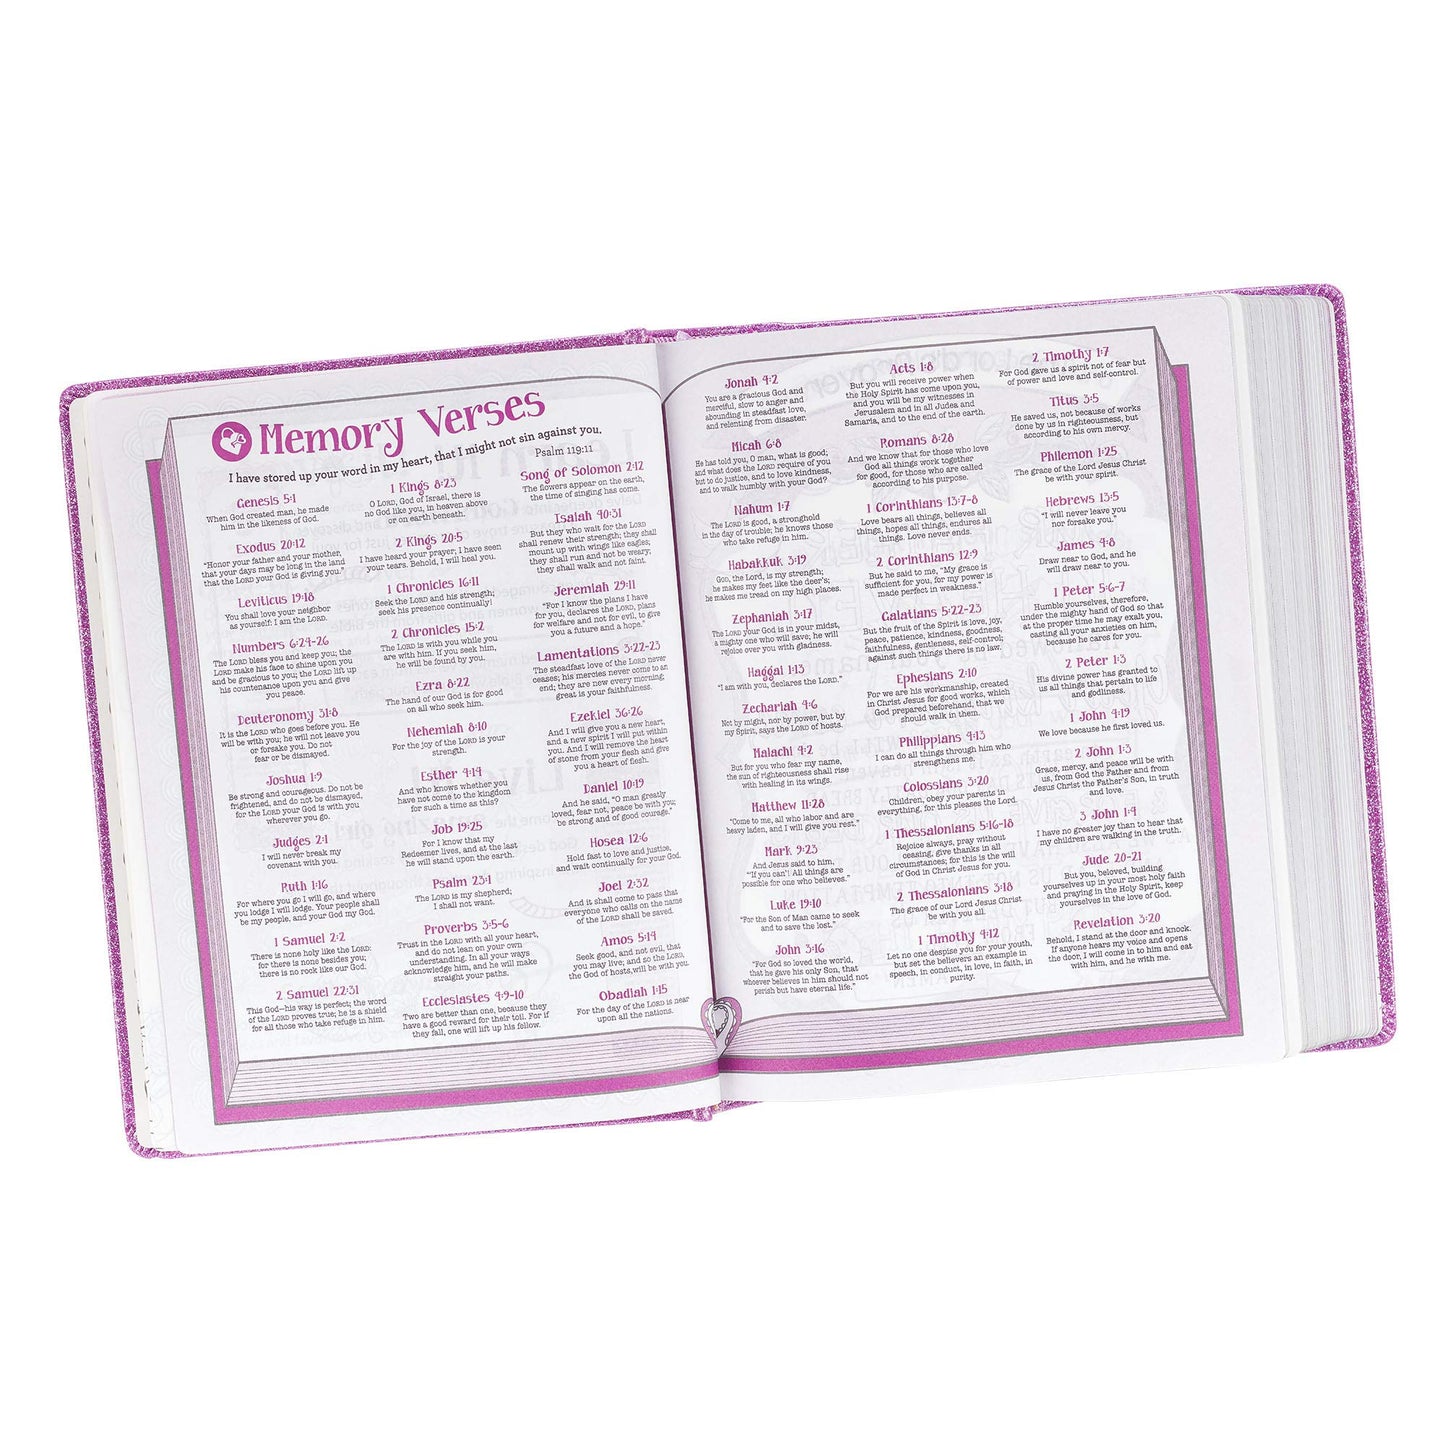 Purple Glitter My Creative Bible for Girls - ESV Journaling Bible (K488)